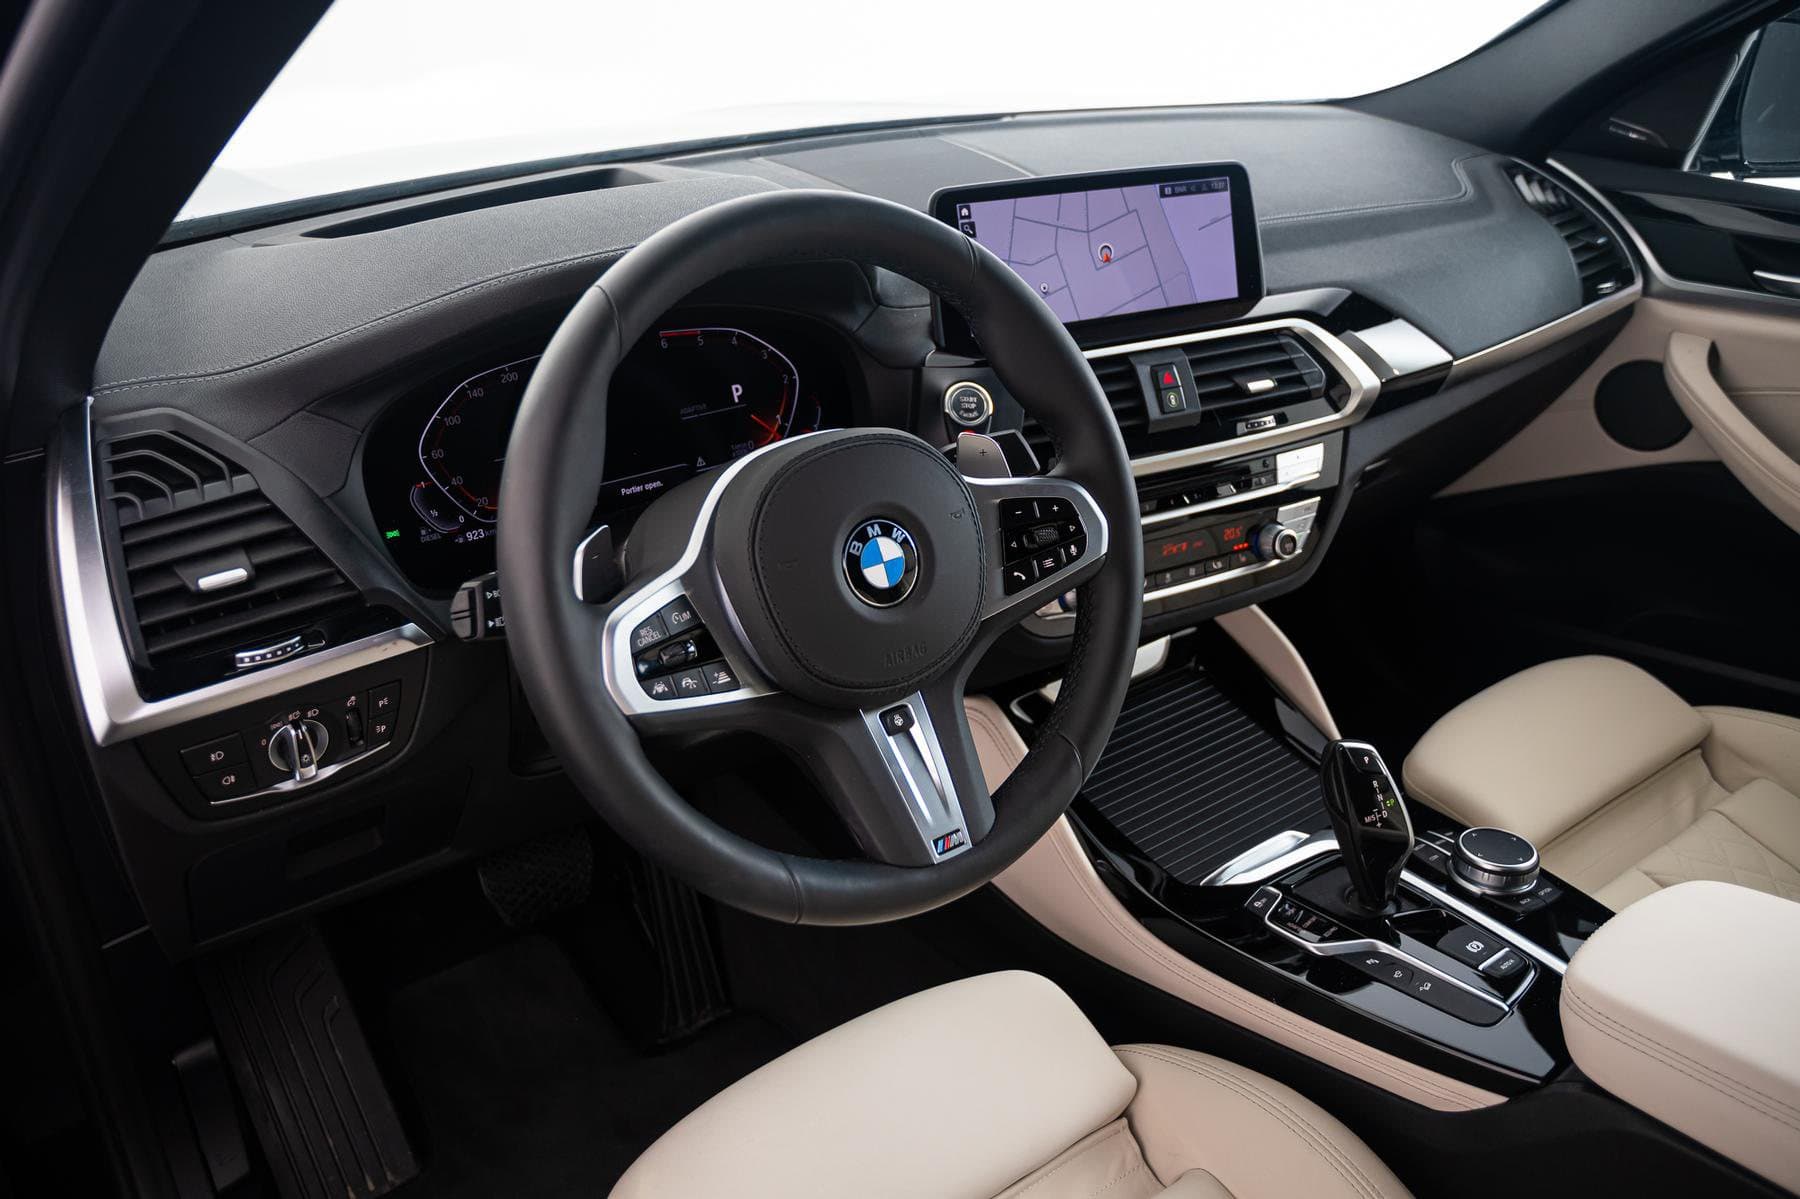 BMW Driving Assistant Plus